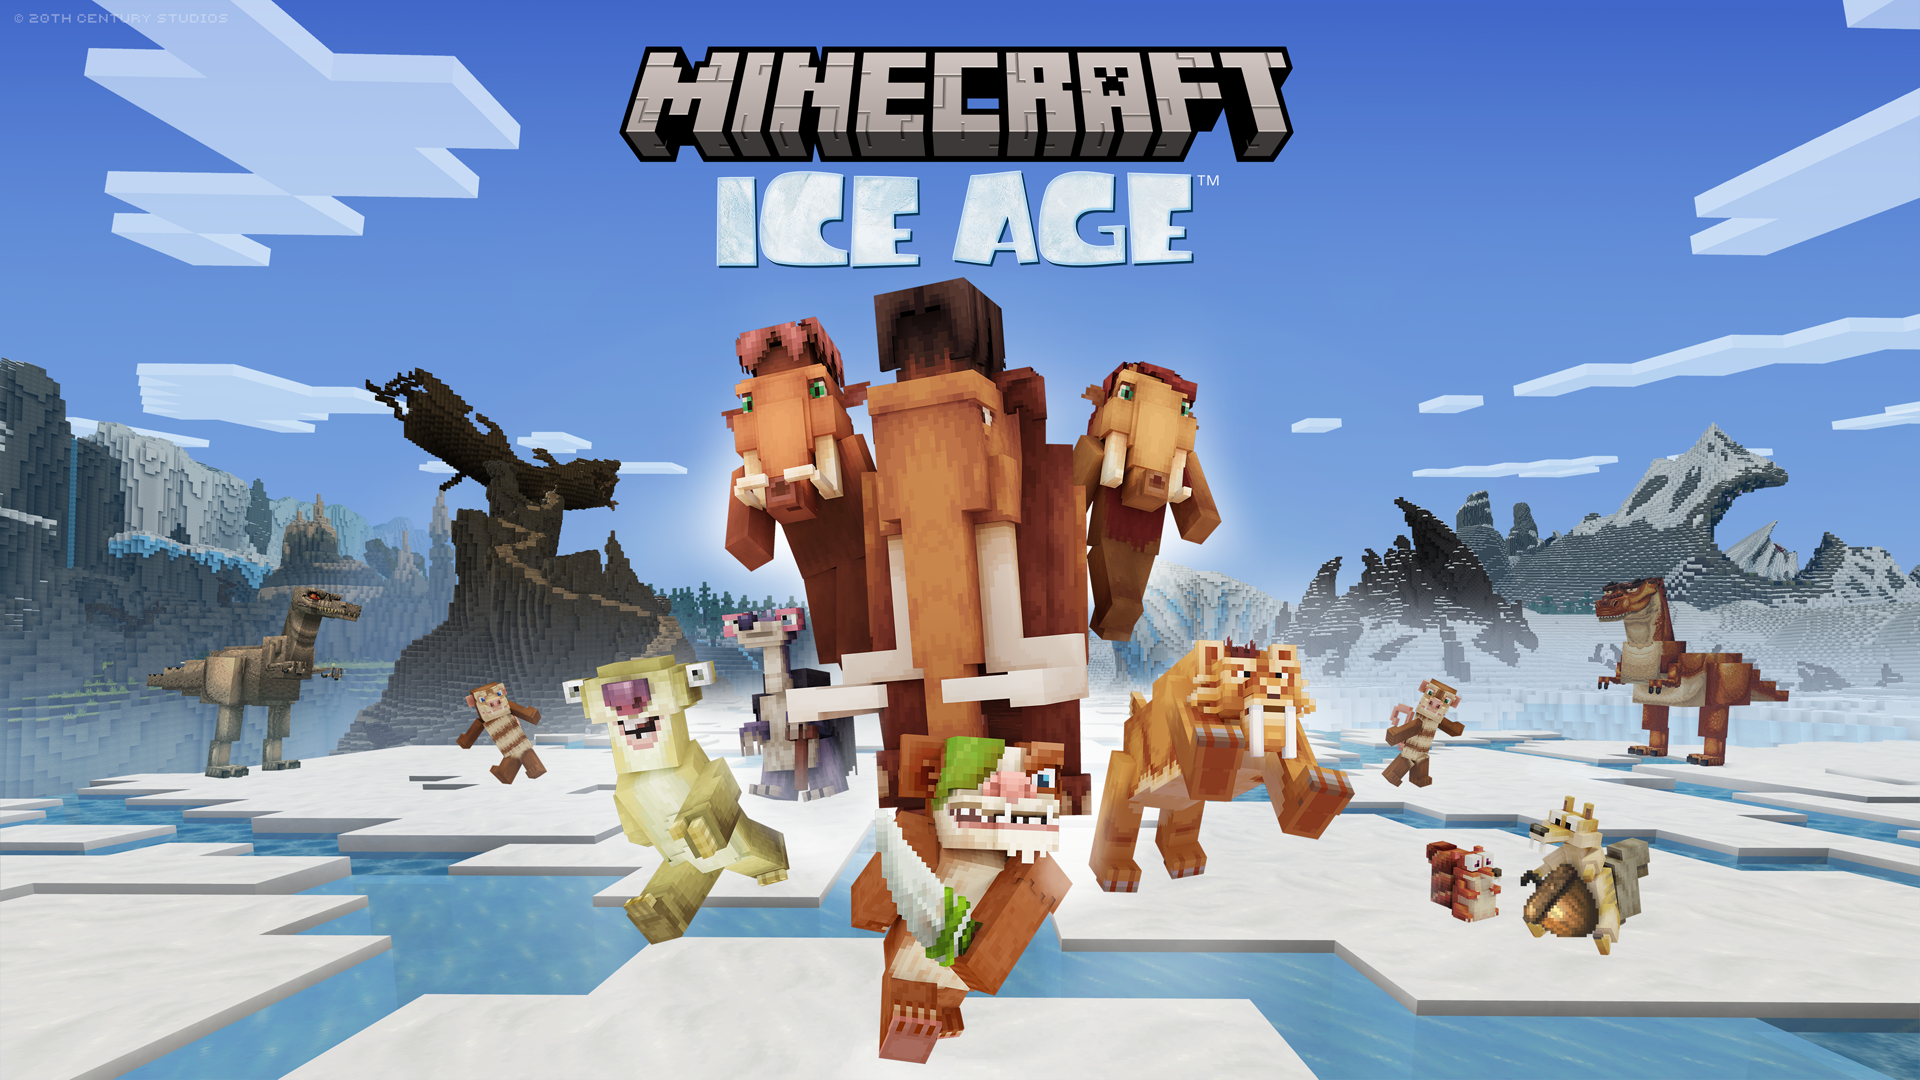 Slip into the Ice Age! Key Art